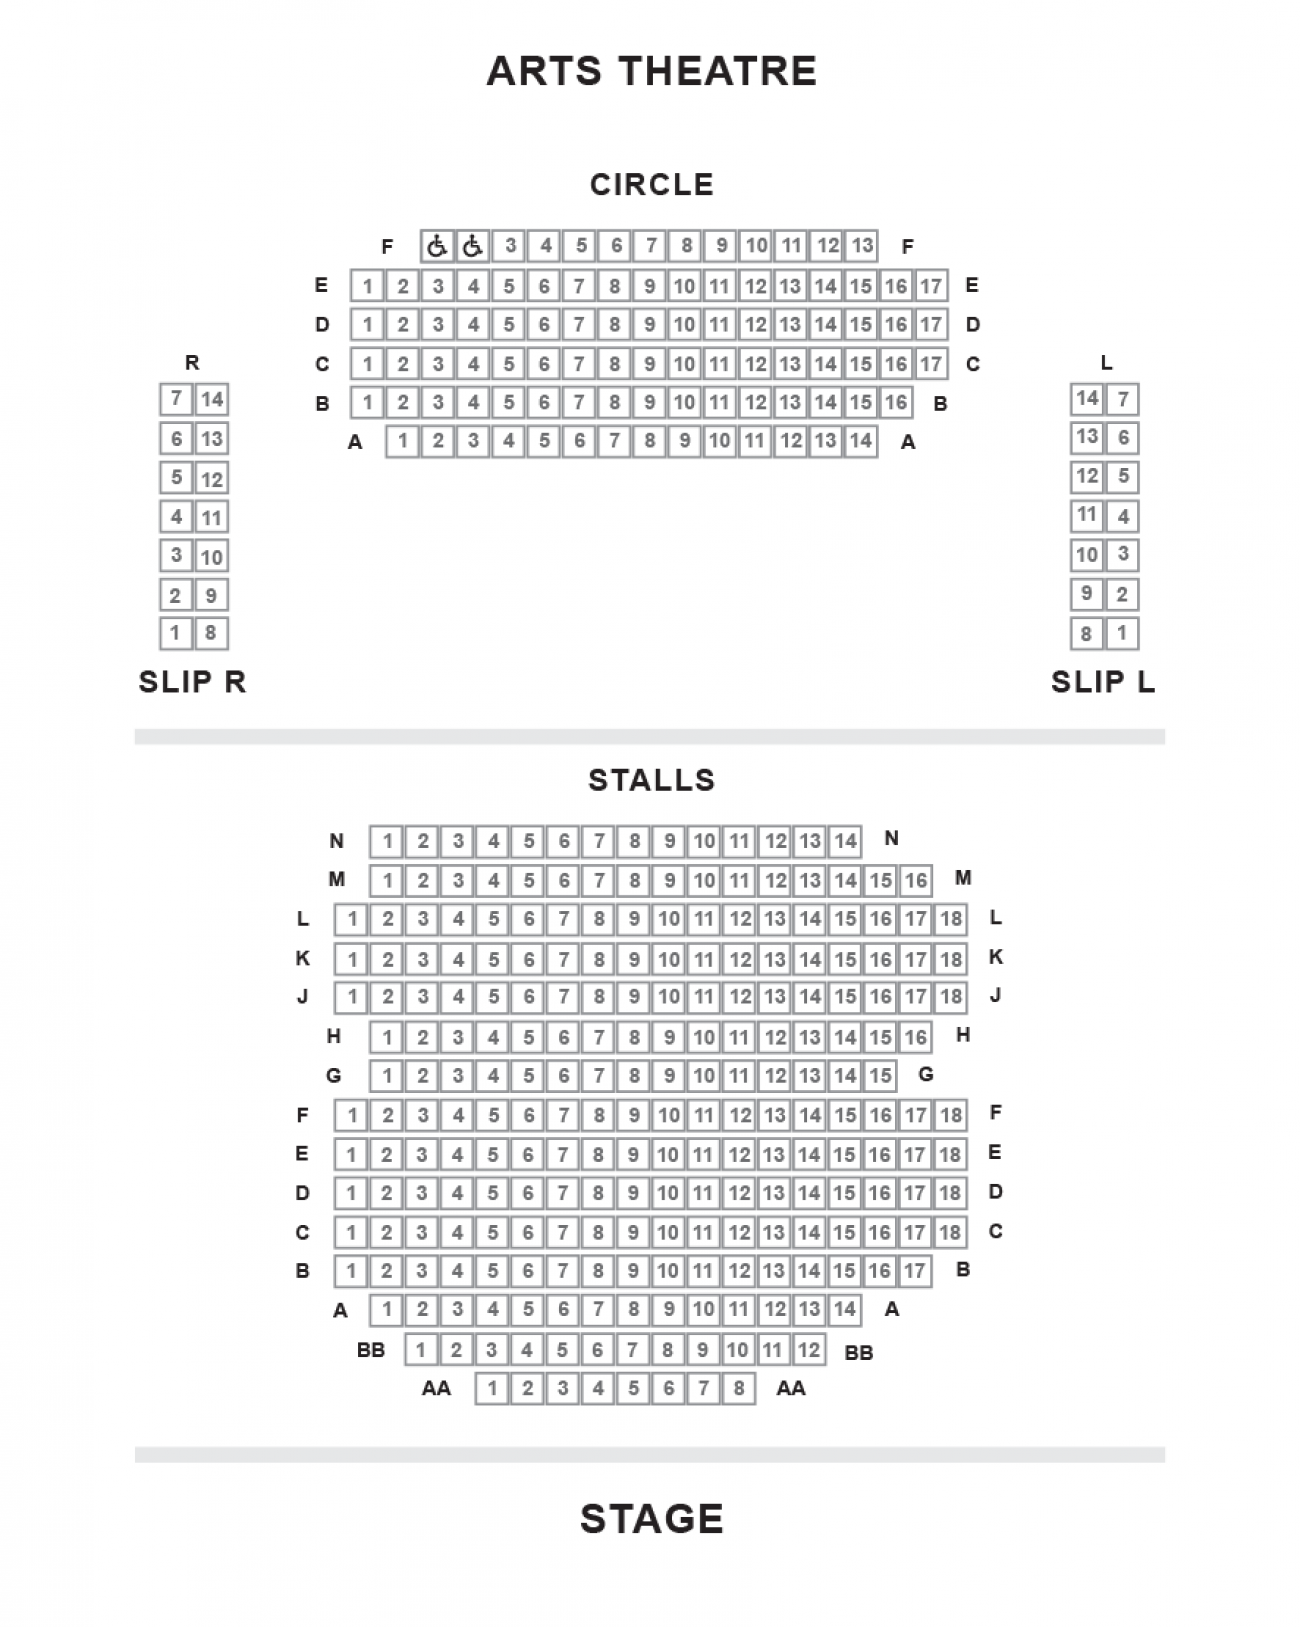 Ambassador Theatre London Seating Chart